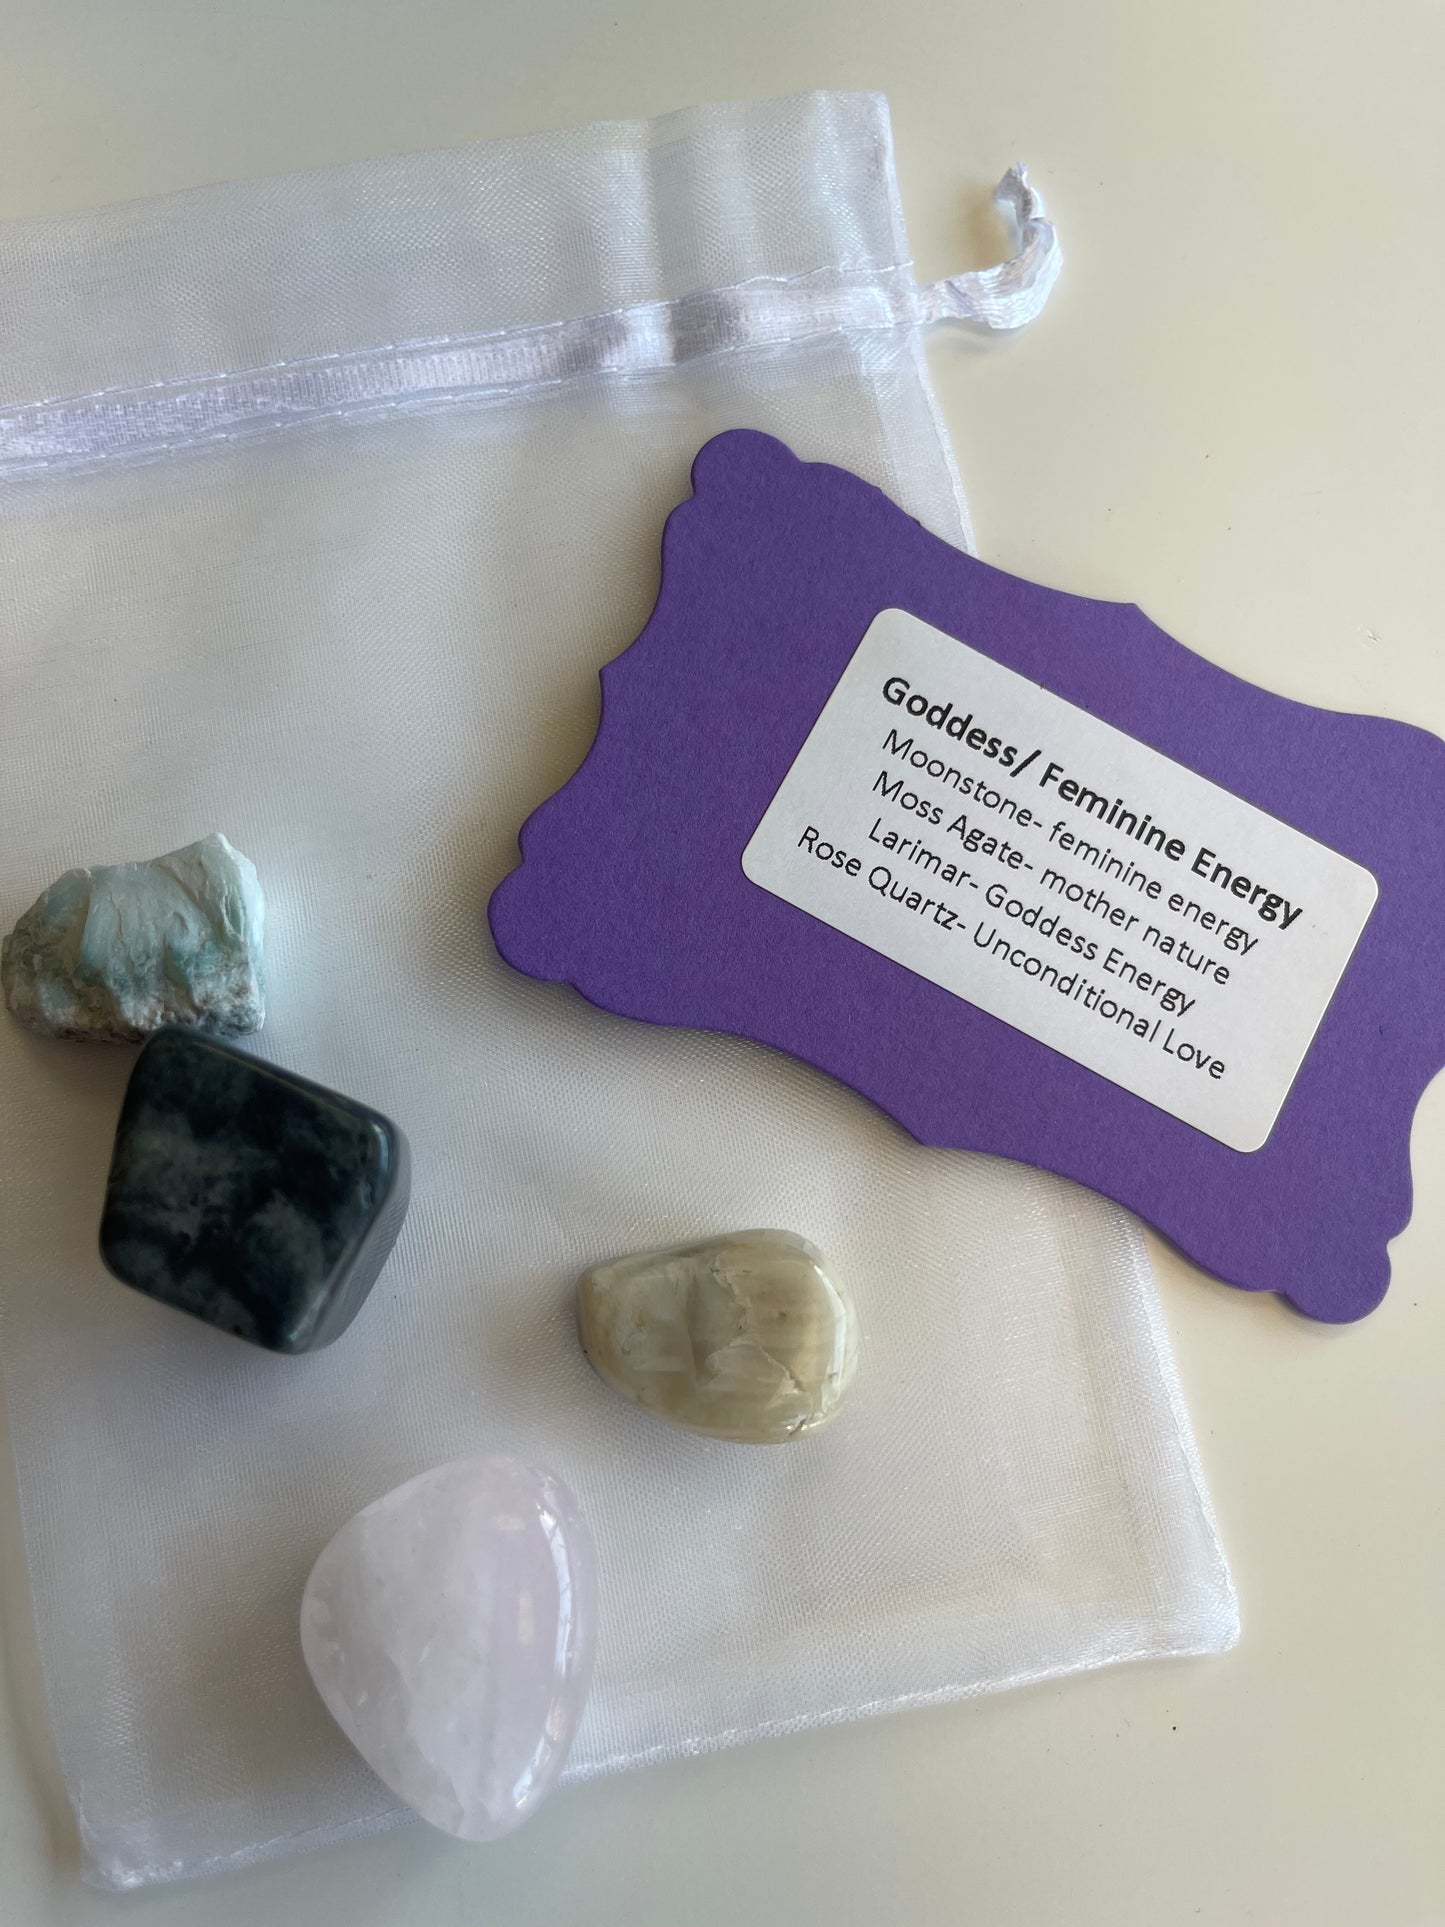 Goddess and Feminine Energy Intention Crystal Set